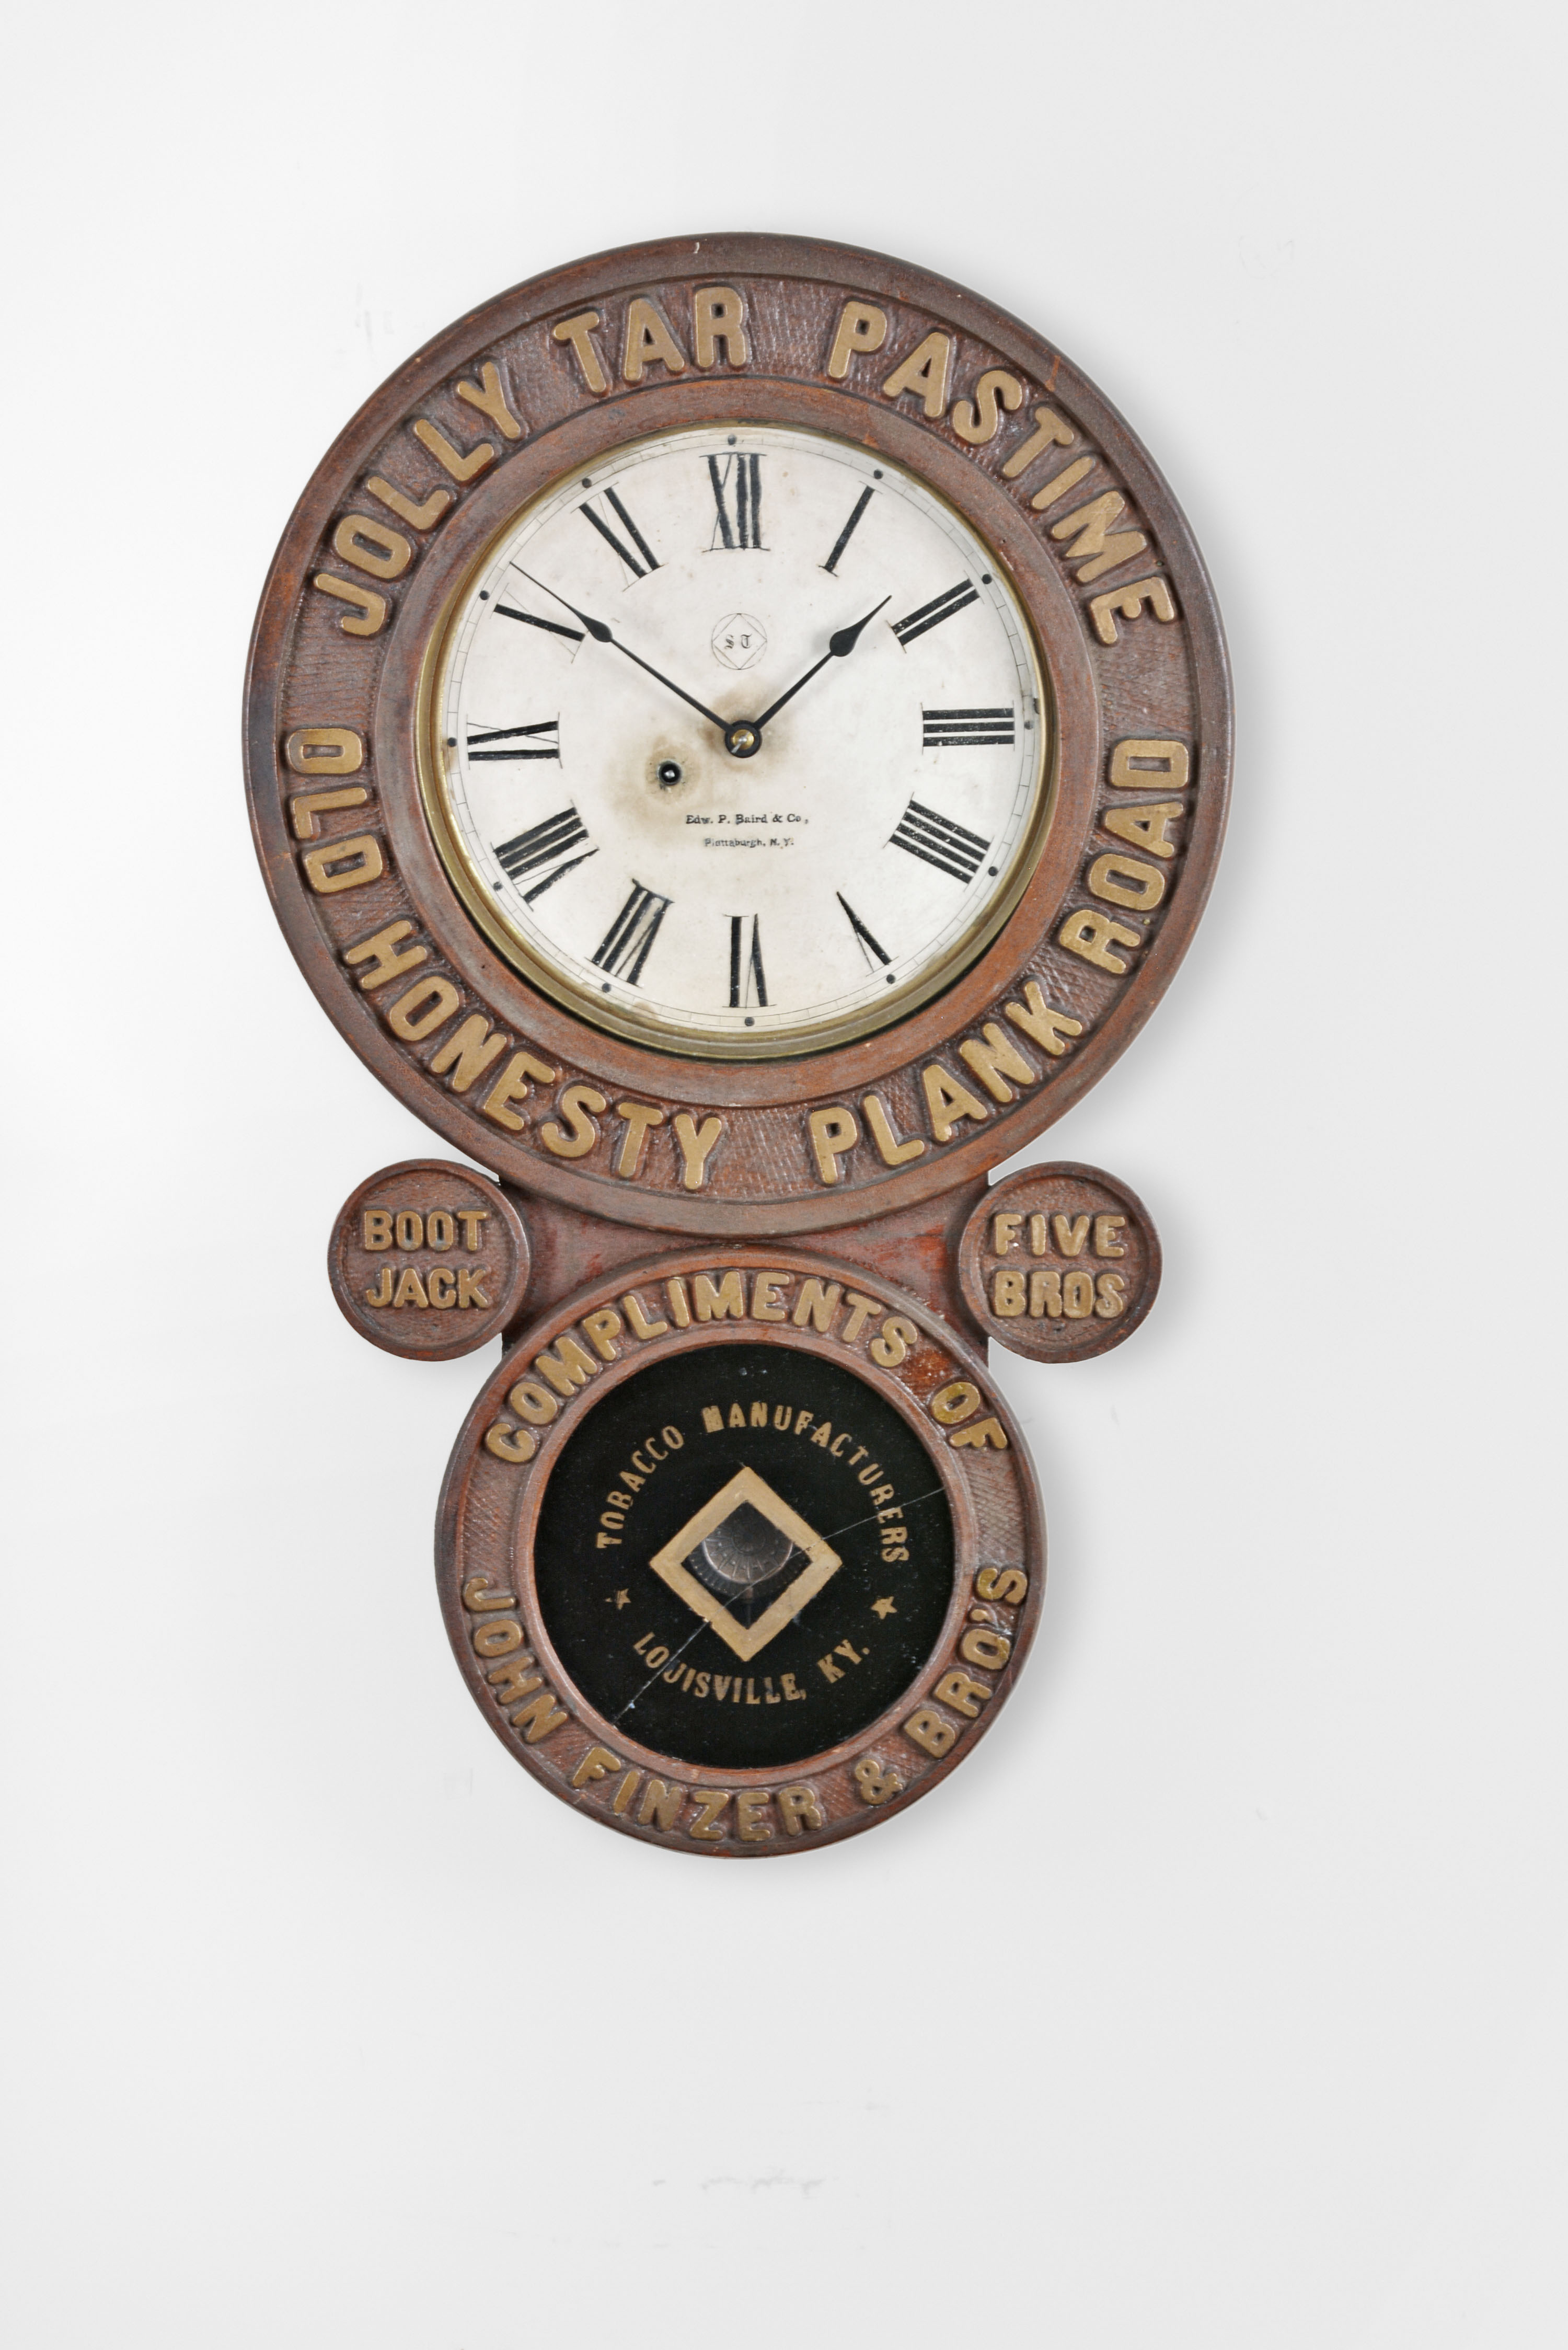 Junghans Vintage Mantle Clock With Pendulum W278 Movement 199 99 Vintage Mantle Clocks Vintage Mantle Mantle Clock